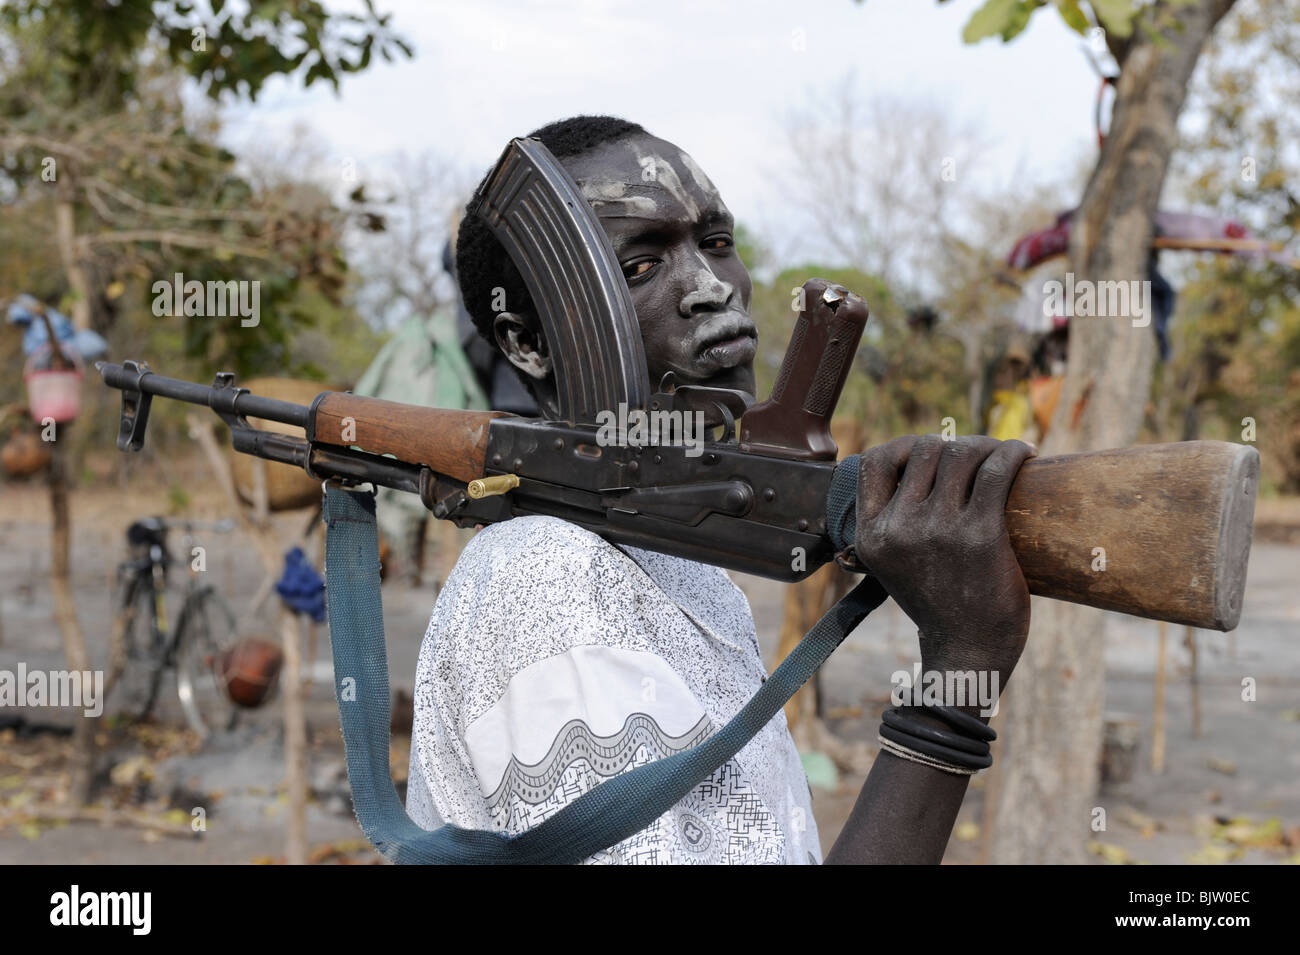 SOUTH-SUDAN, Cuibet near Rumbek, shepherd with ash smeared face posing with Kalashnikov machine gun AK-47 in cattle camp Stock Photo